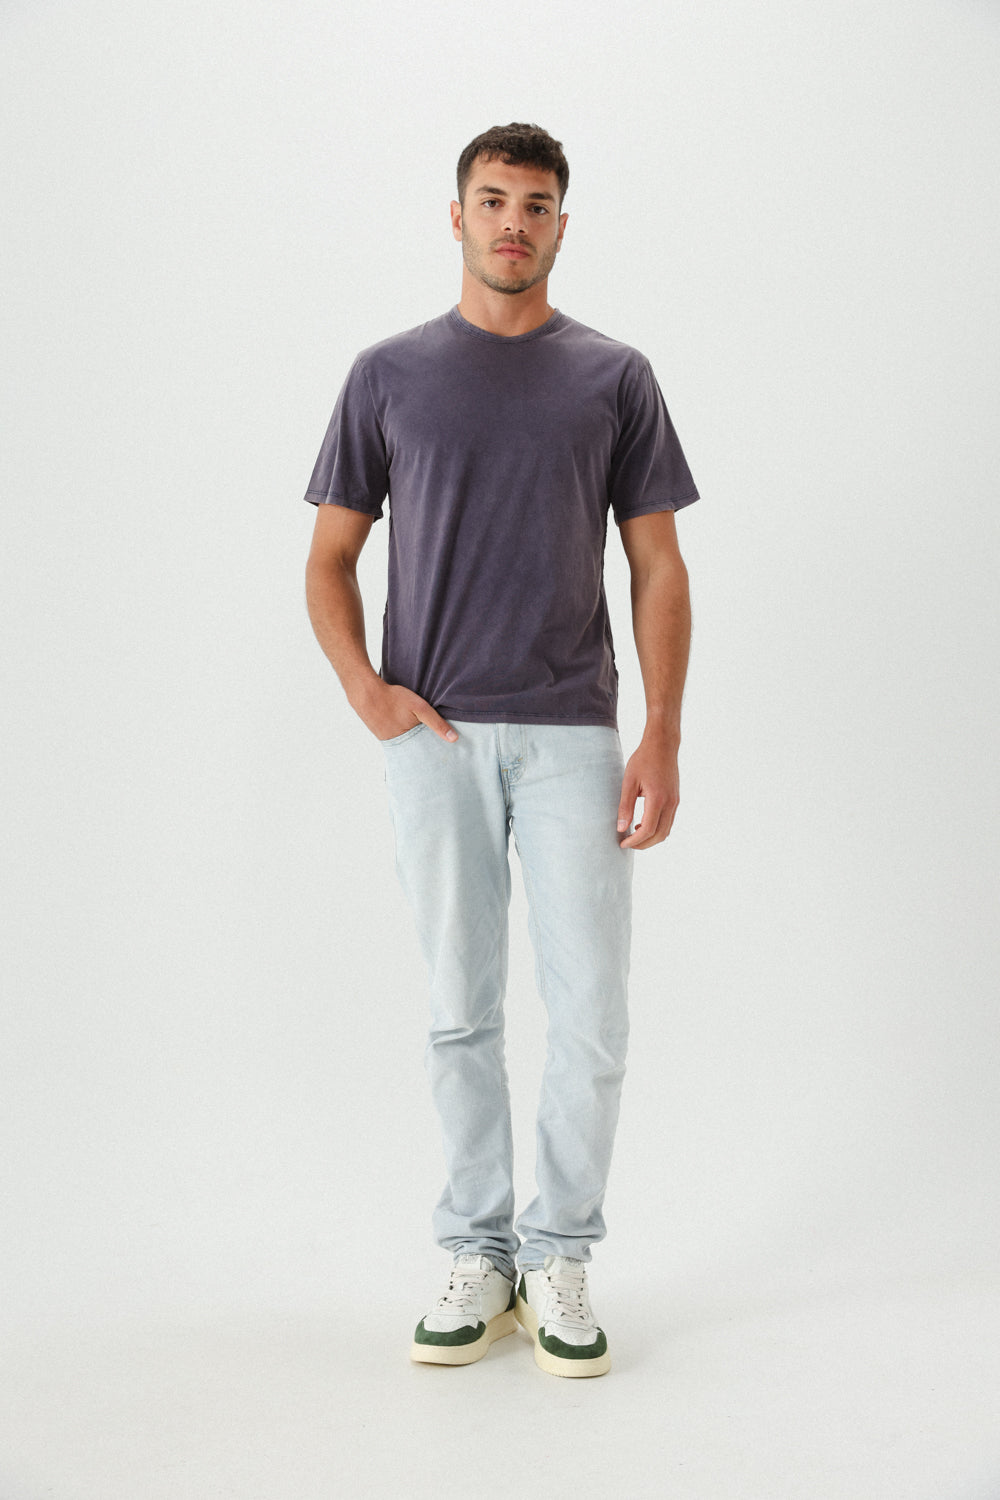 BroStarz Purple T-Shirt